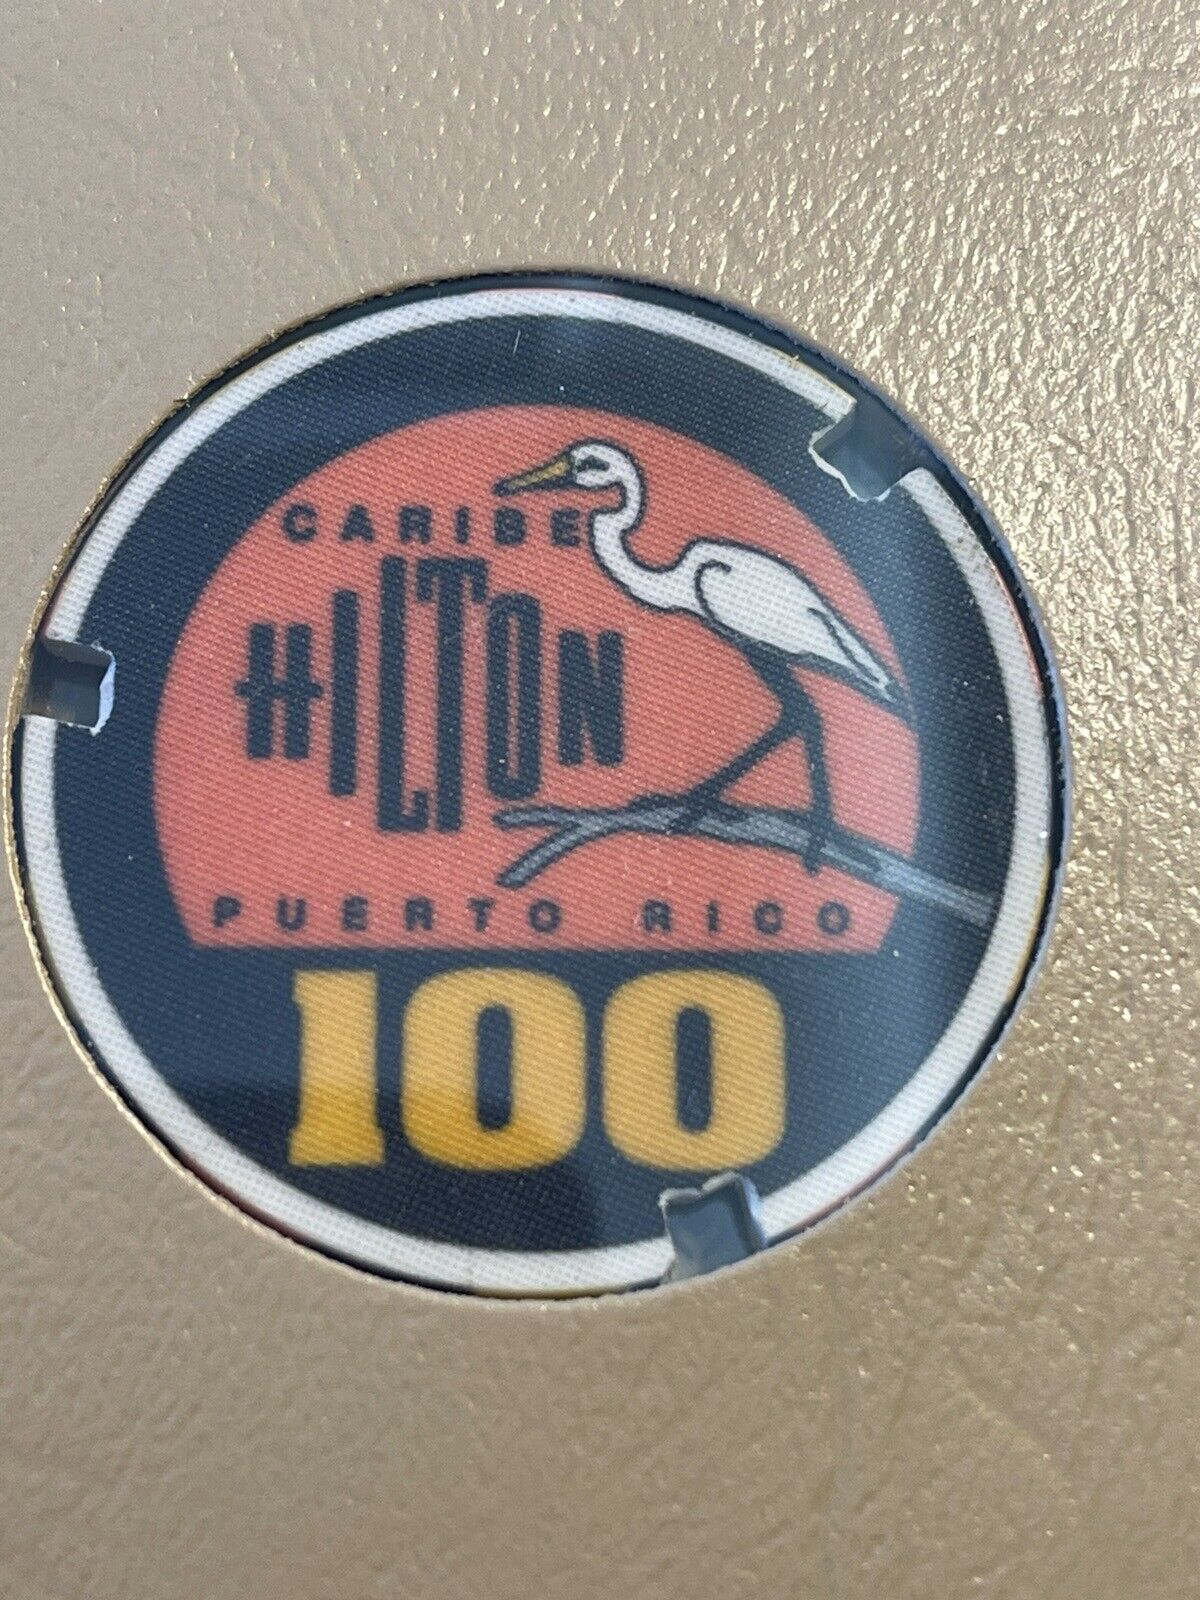 $100 Caribe Hilton San Juan Puerto Rico Casino Notched Chip CC CHC-100